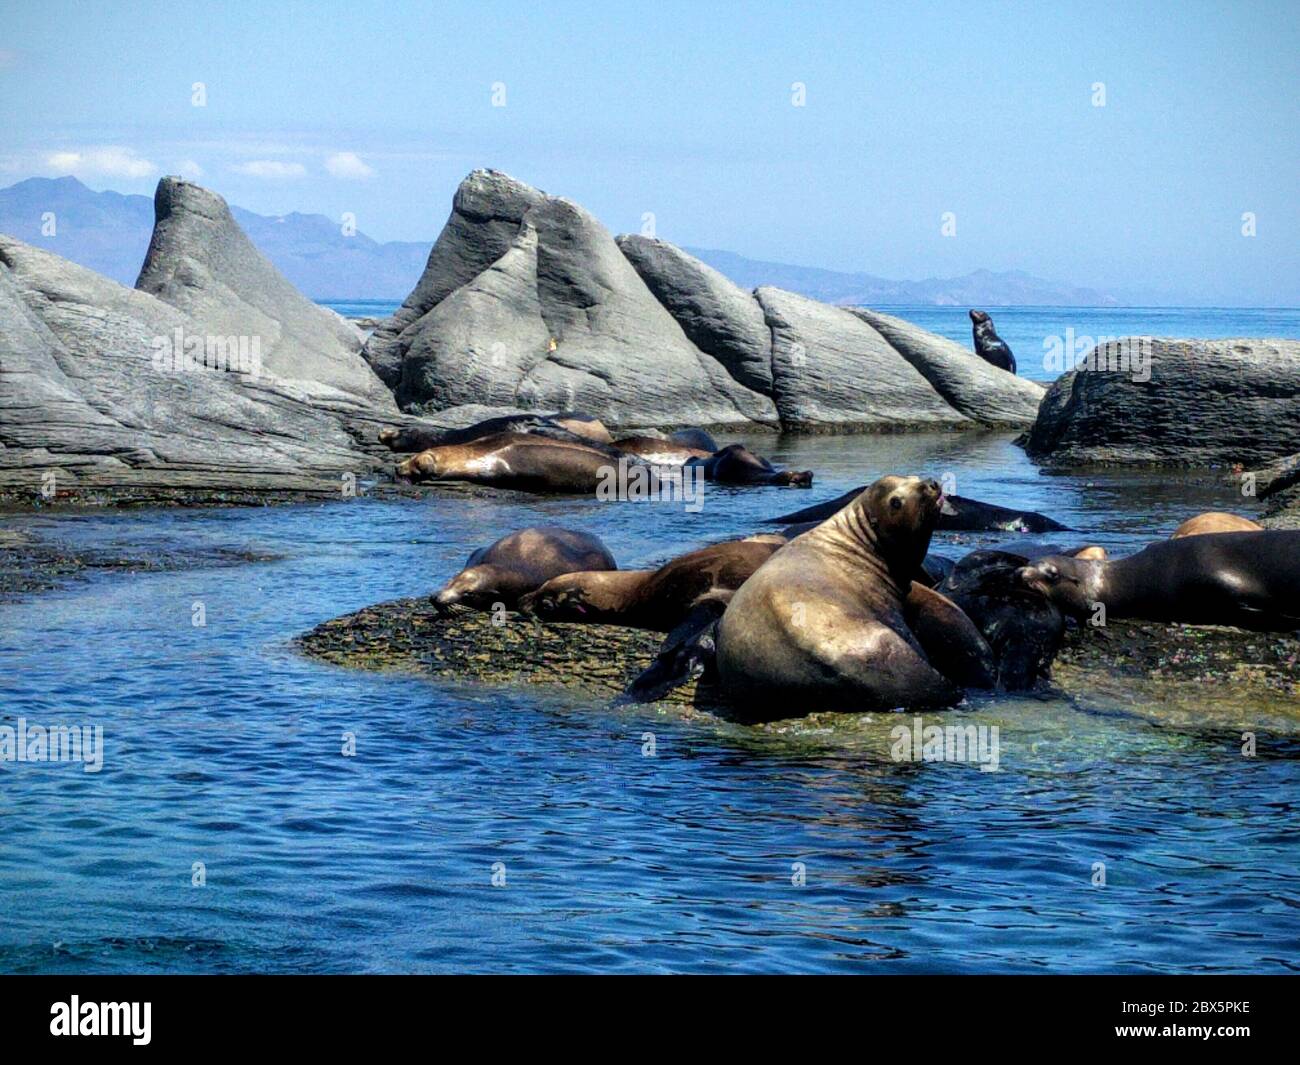 Loreto sea lions, Baja California, Mexico. A group of sea lions resting on the rocks that surround the Coronado Island in the Loreto bay. Stock Photo